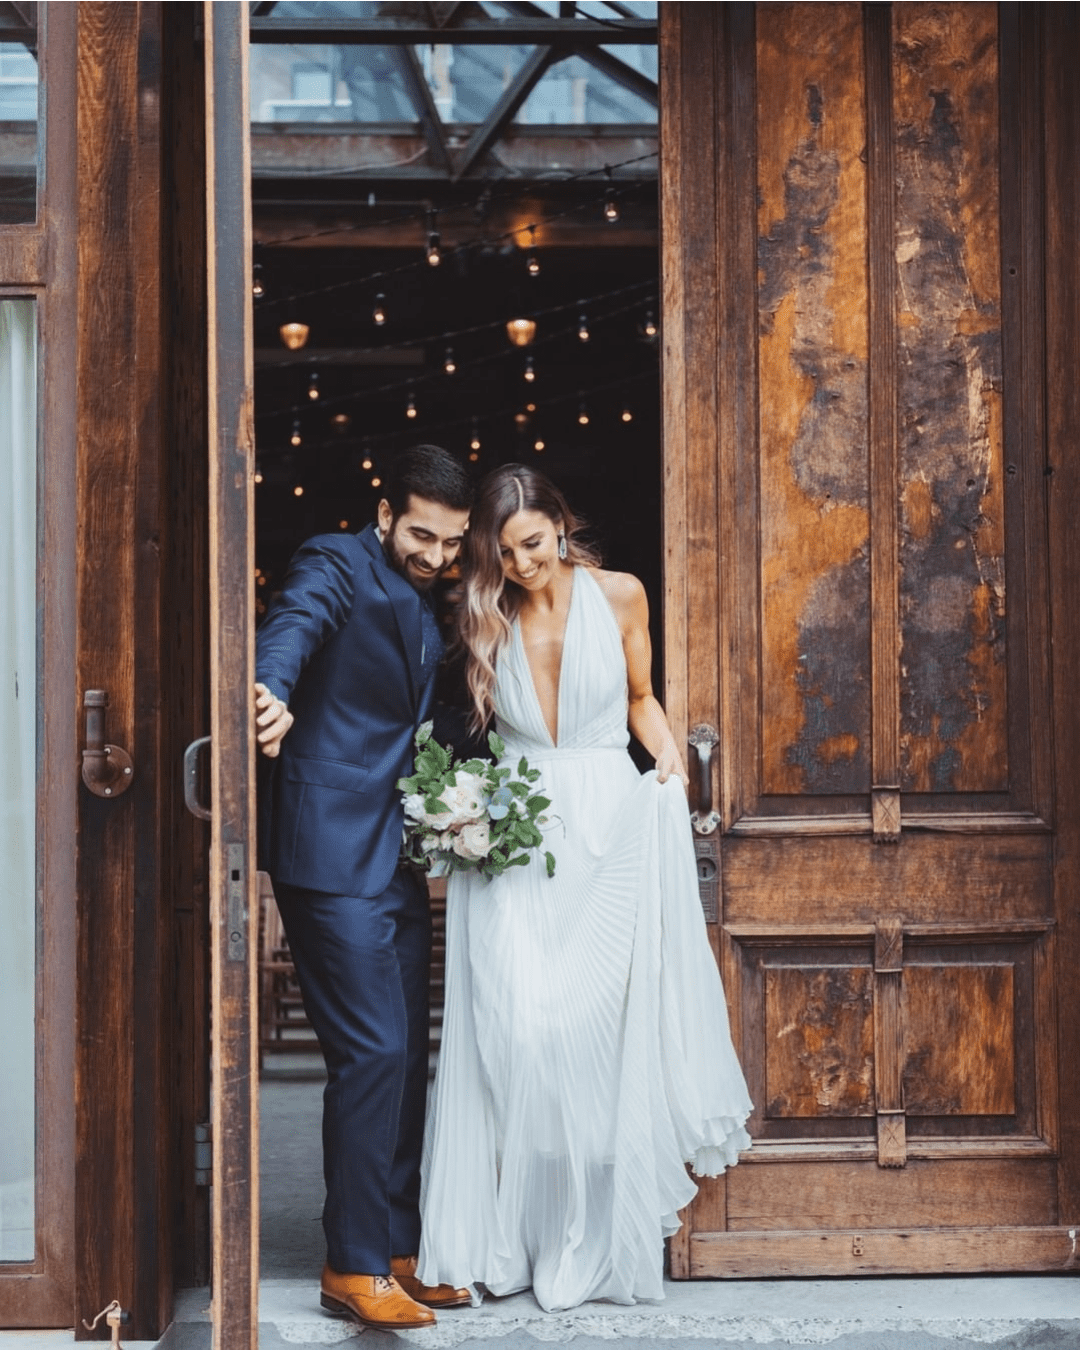 best wedding venues in new york newlyweds leaving the building